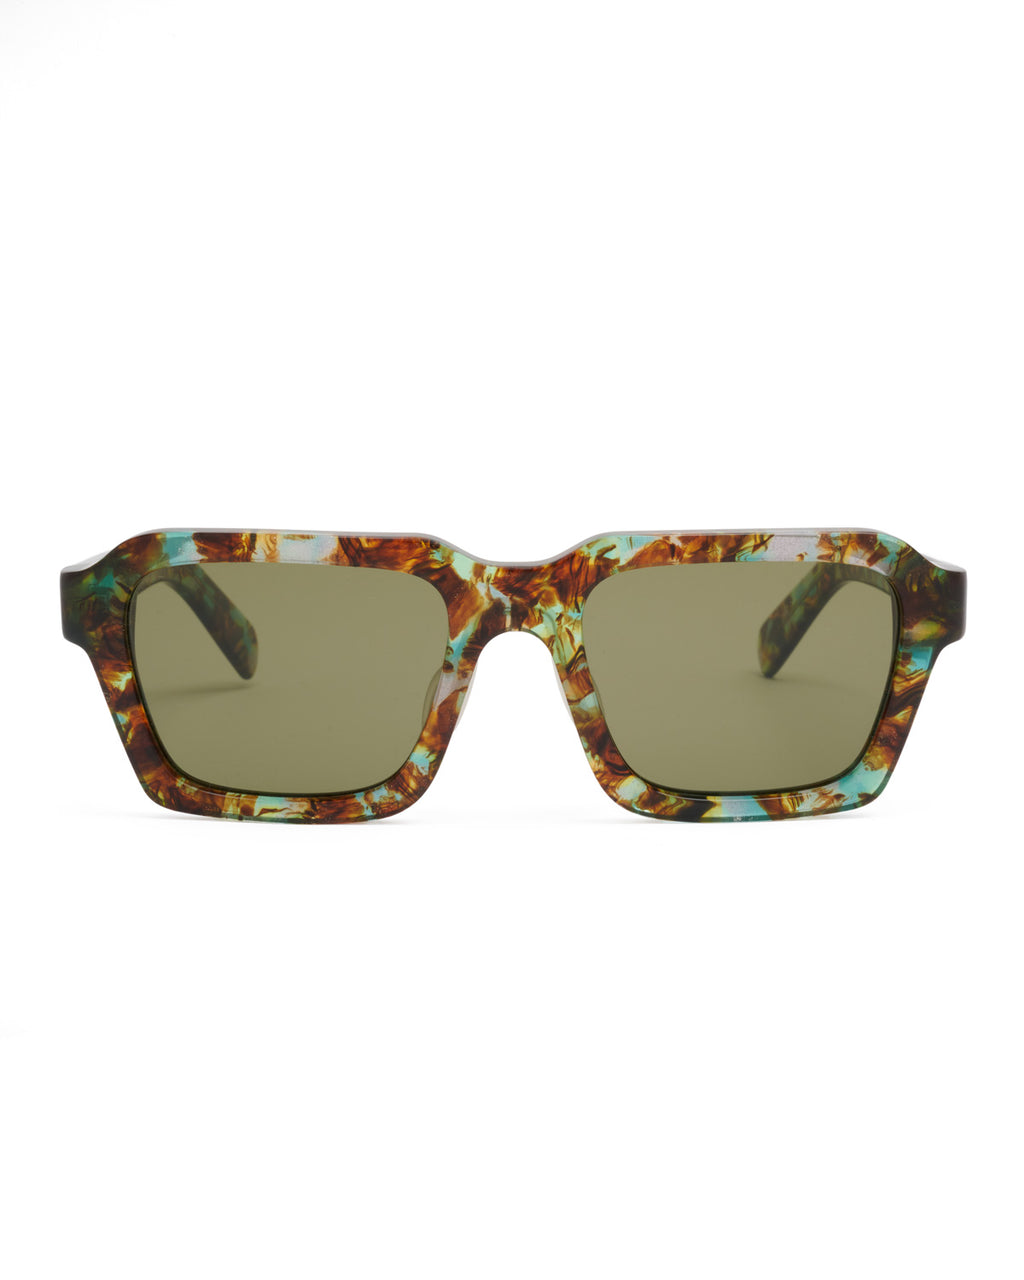 Staunton Post Modern Primitive Eye Protection Sunglasses - Forrest/Green